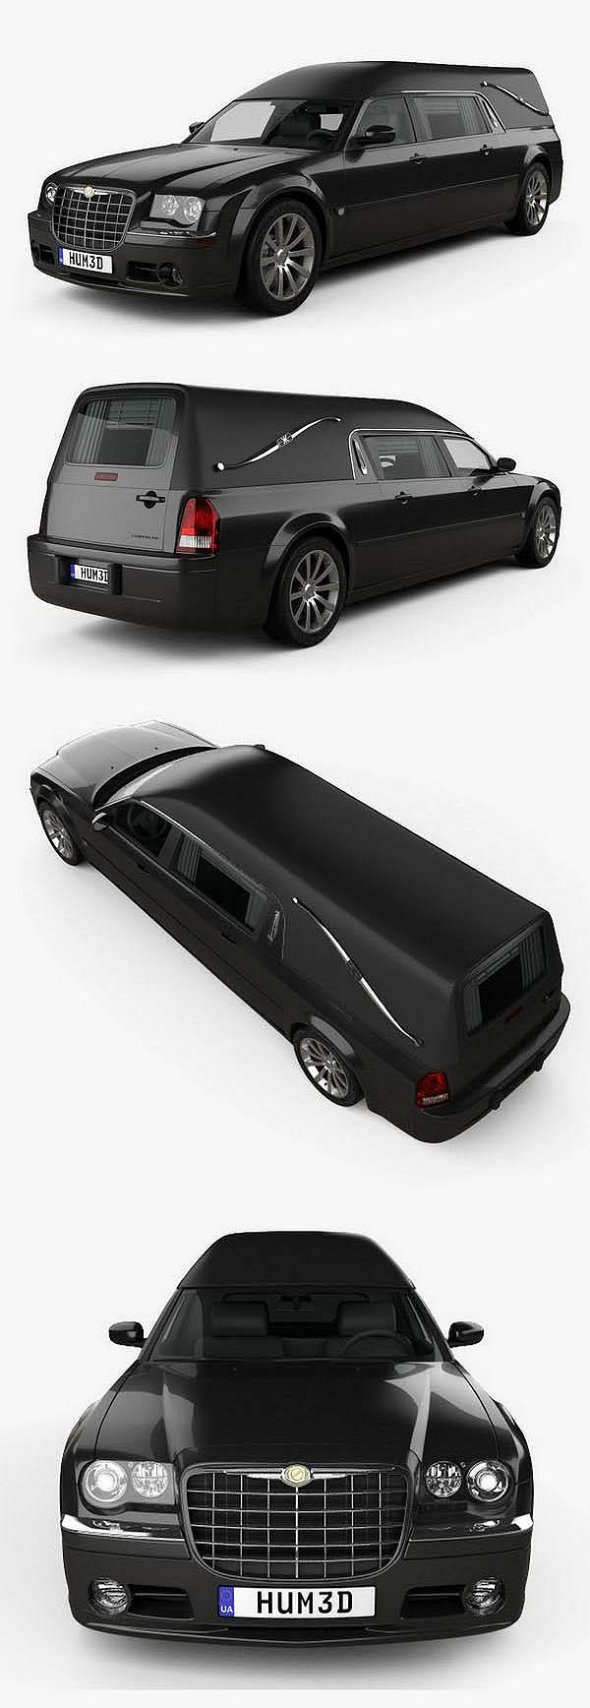 Chrysler 300C hearse 2009